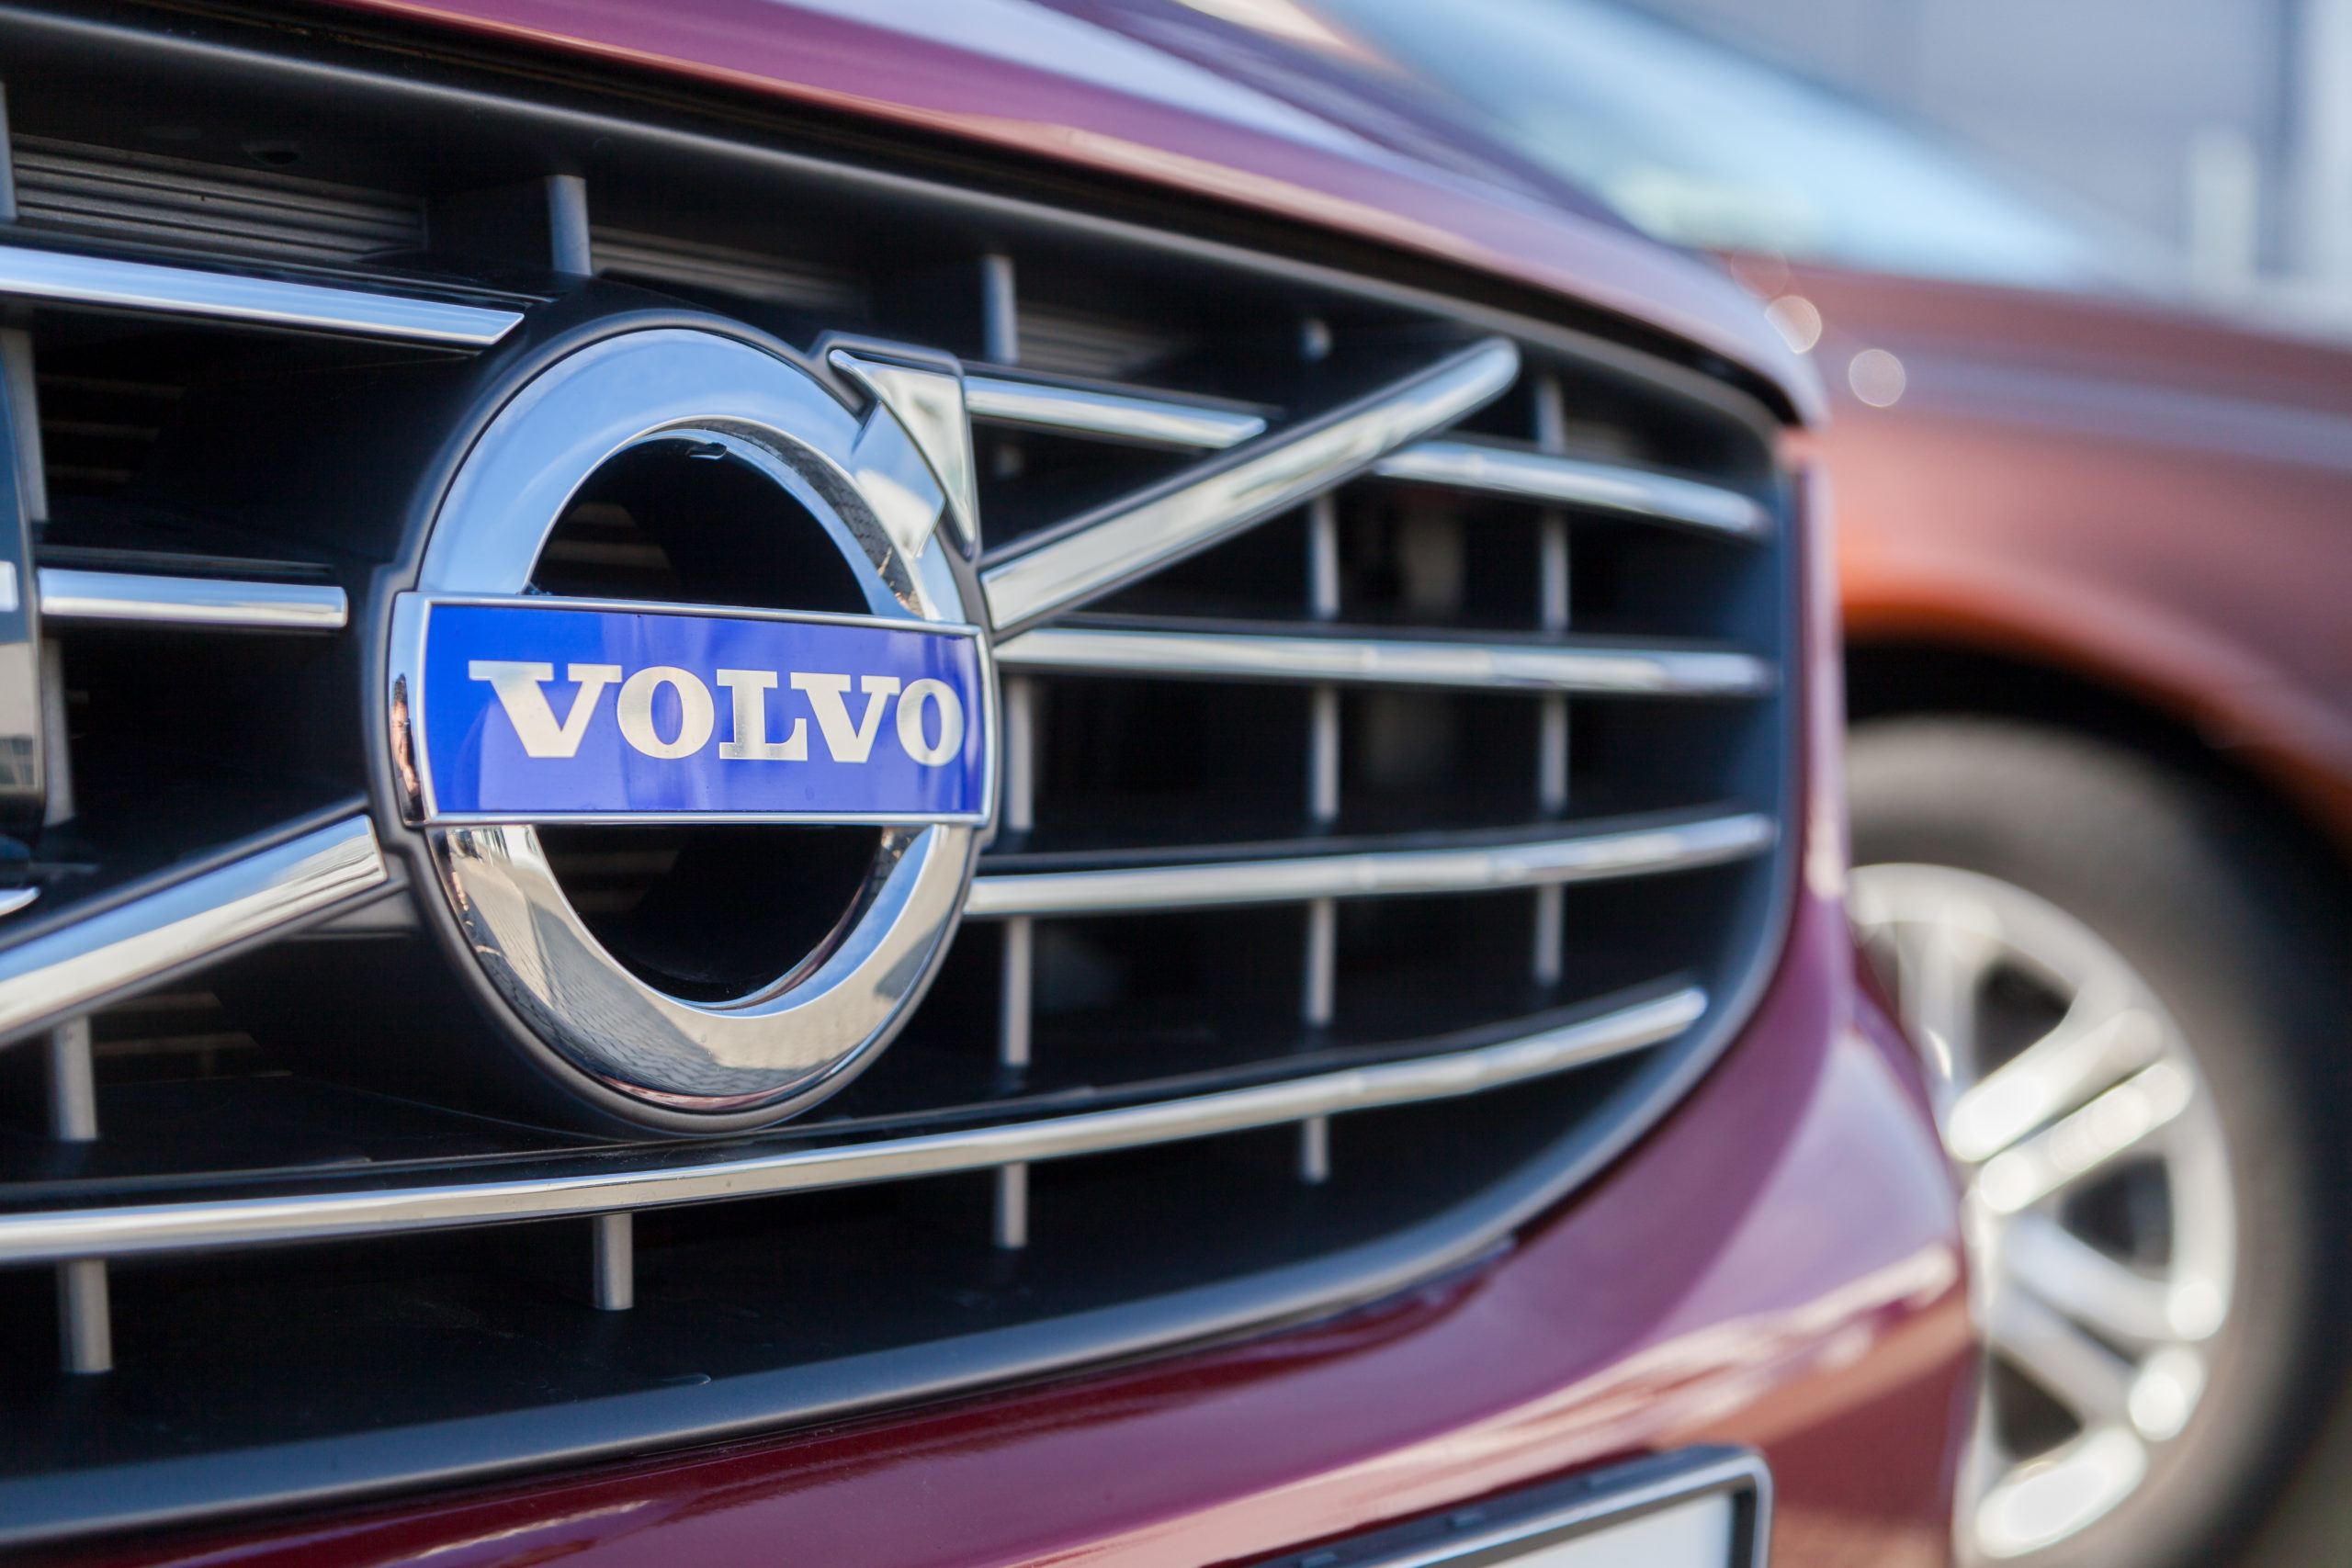 Volvo Repair in New Hampshire: 3 Common Needs